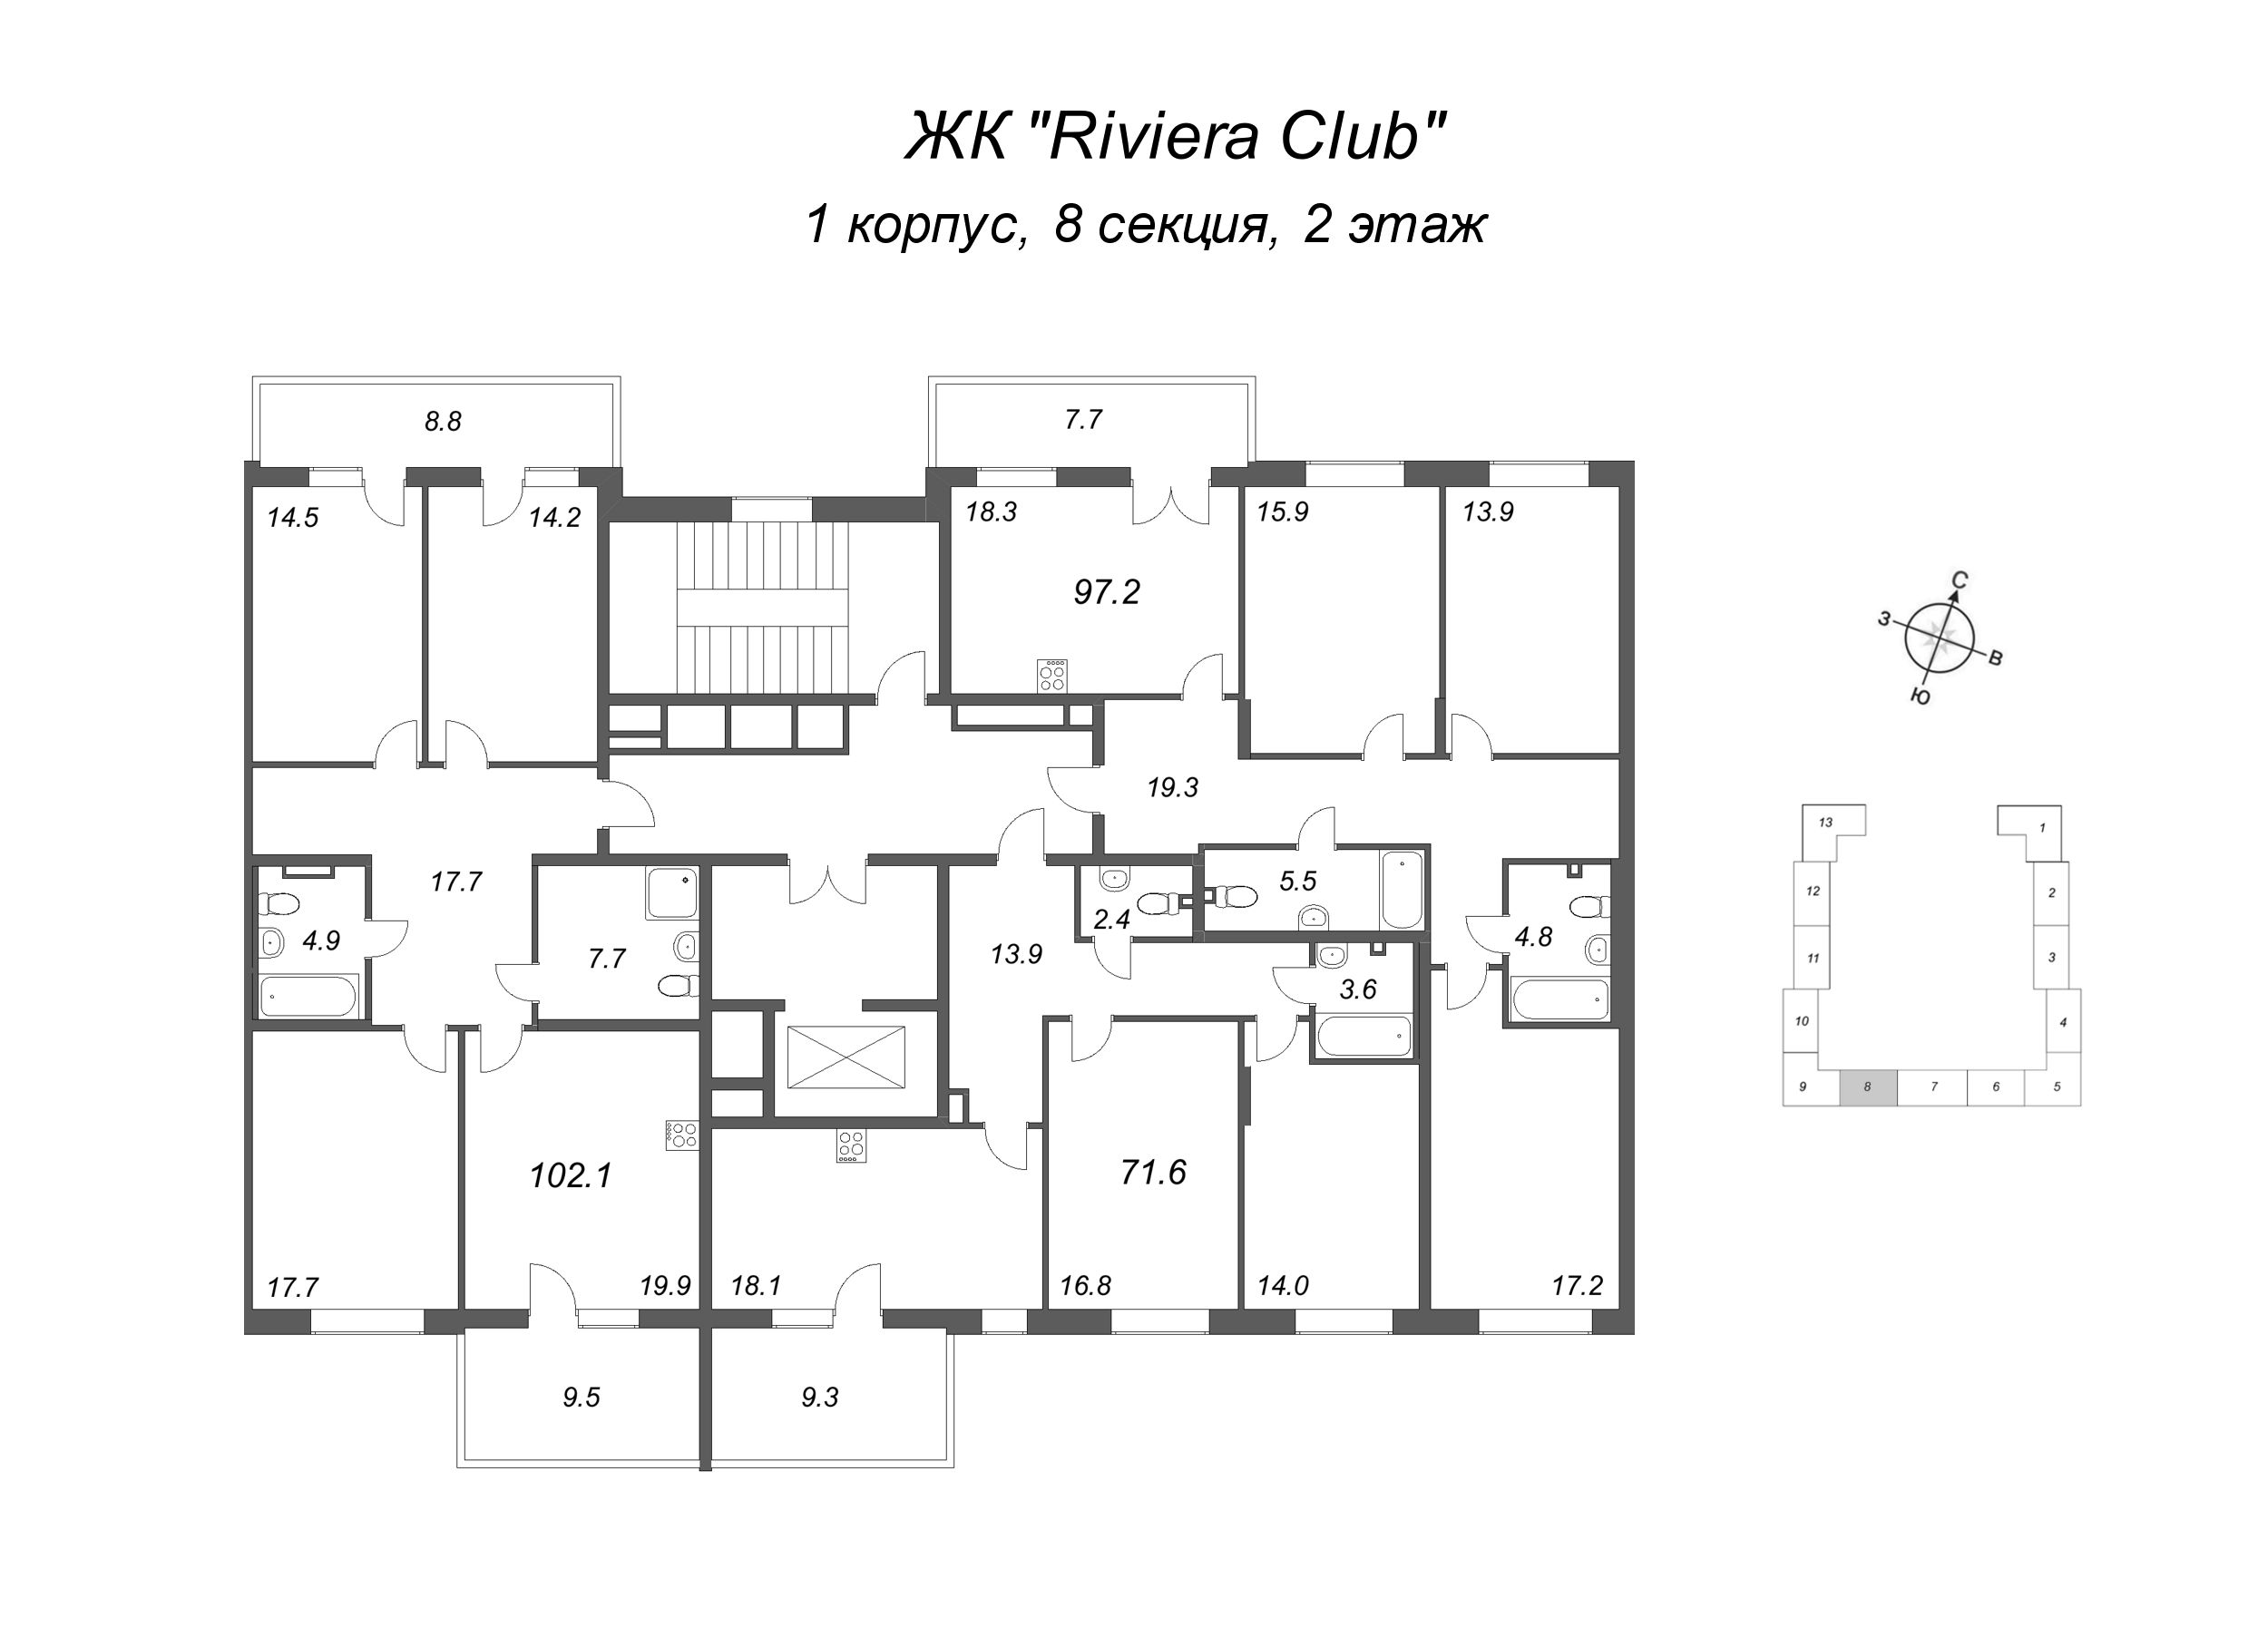 4-комнатная (Евро) квартира, 102.1 м² в ЖК "Riviera Club" - планировка этажа